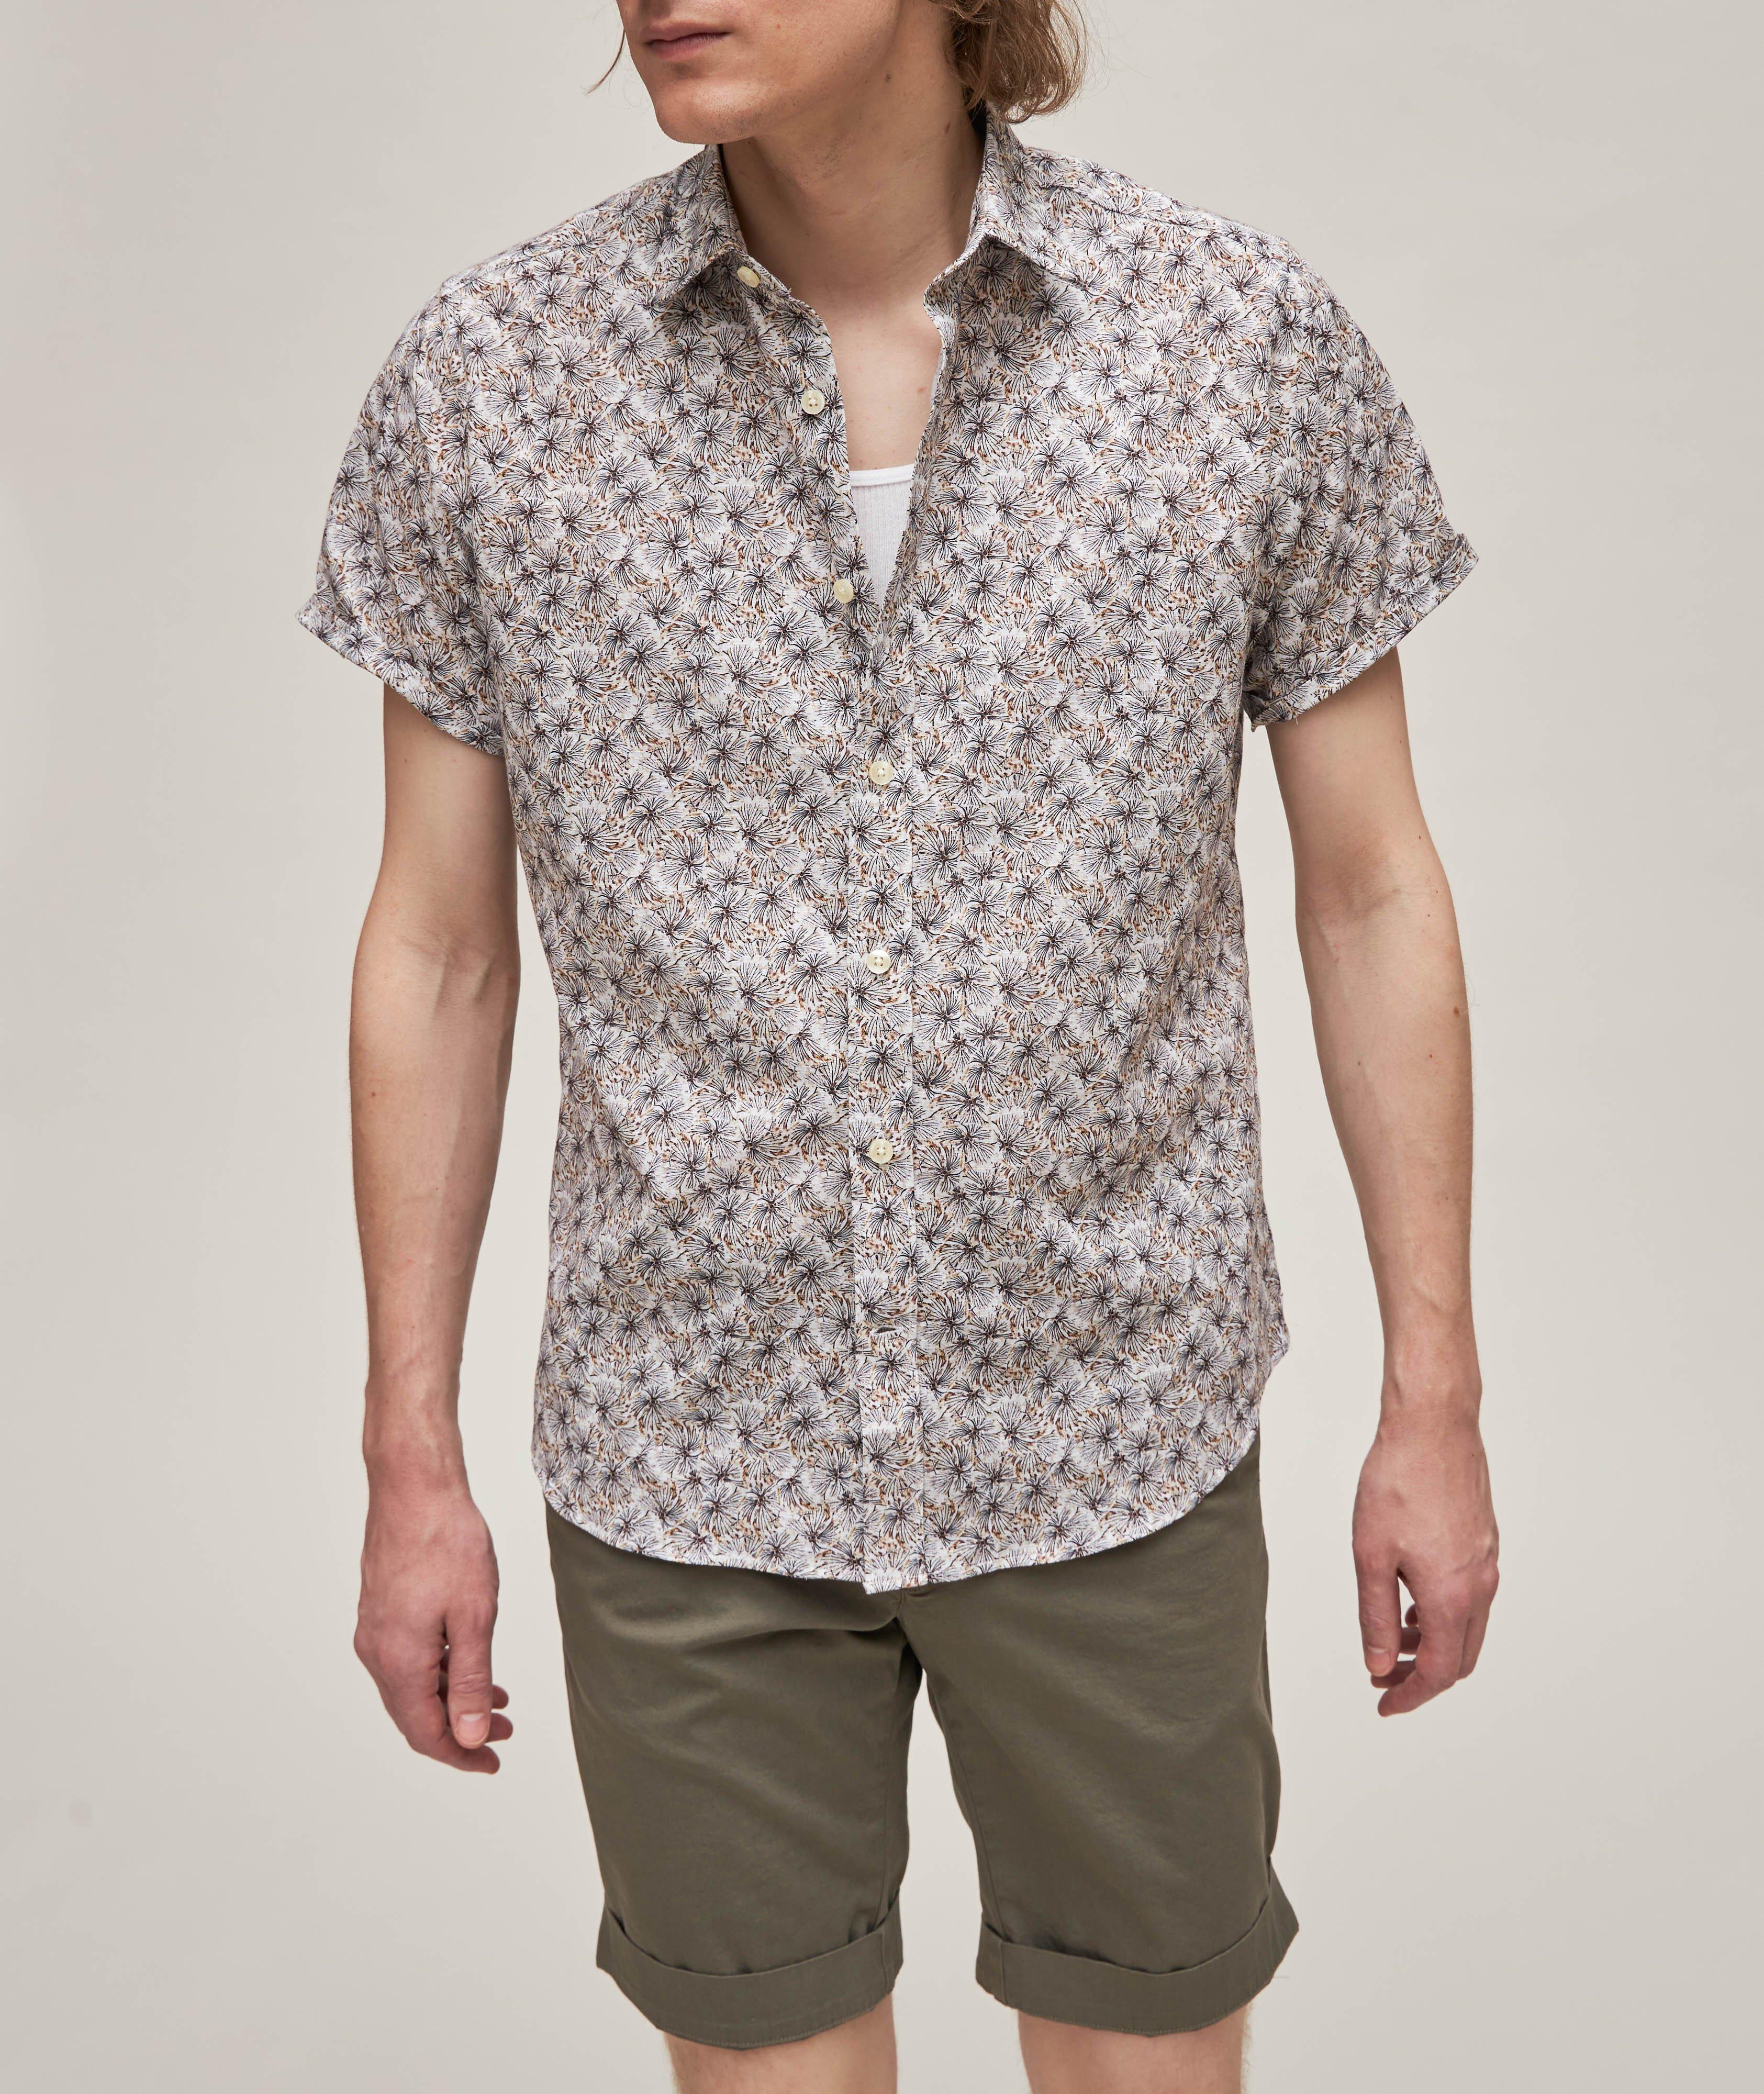 Feathered Pattern Cotton Sport Shirt  image 1